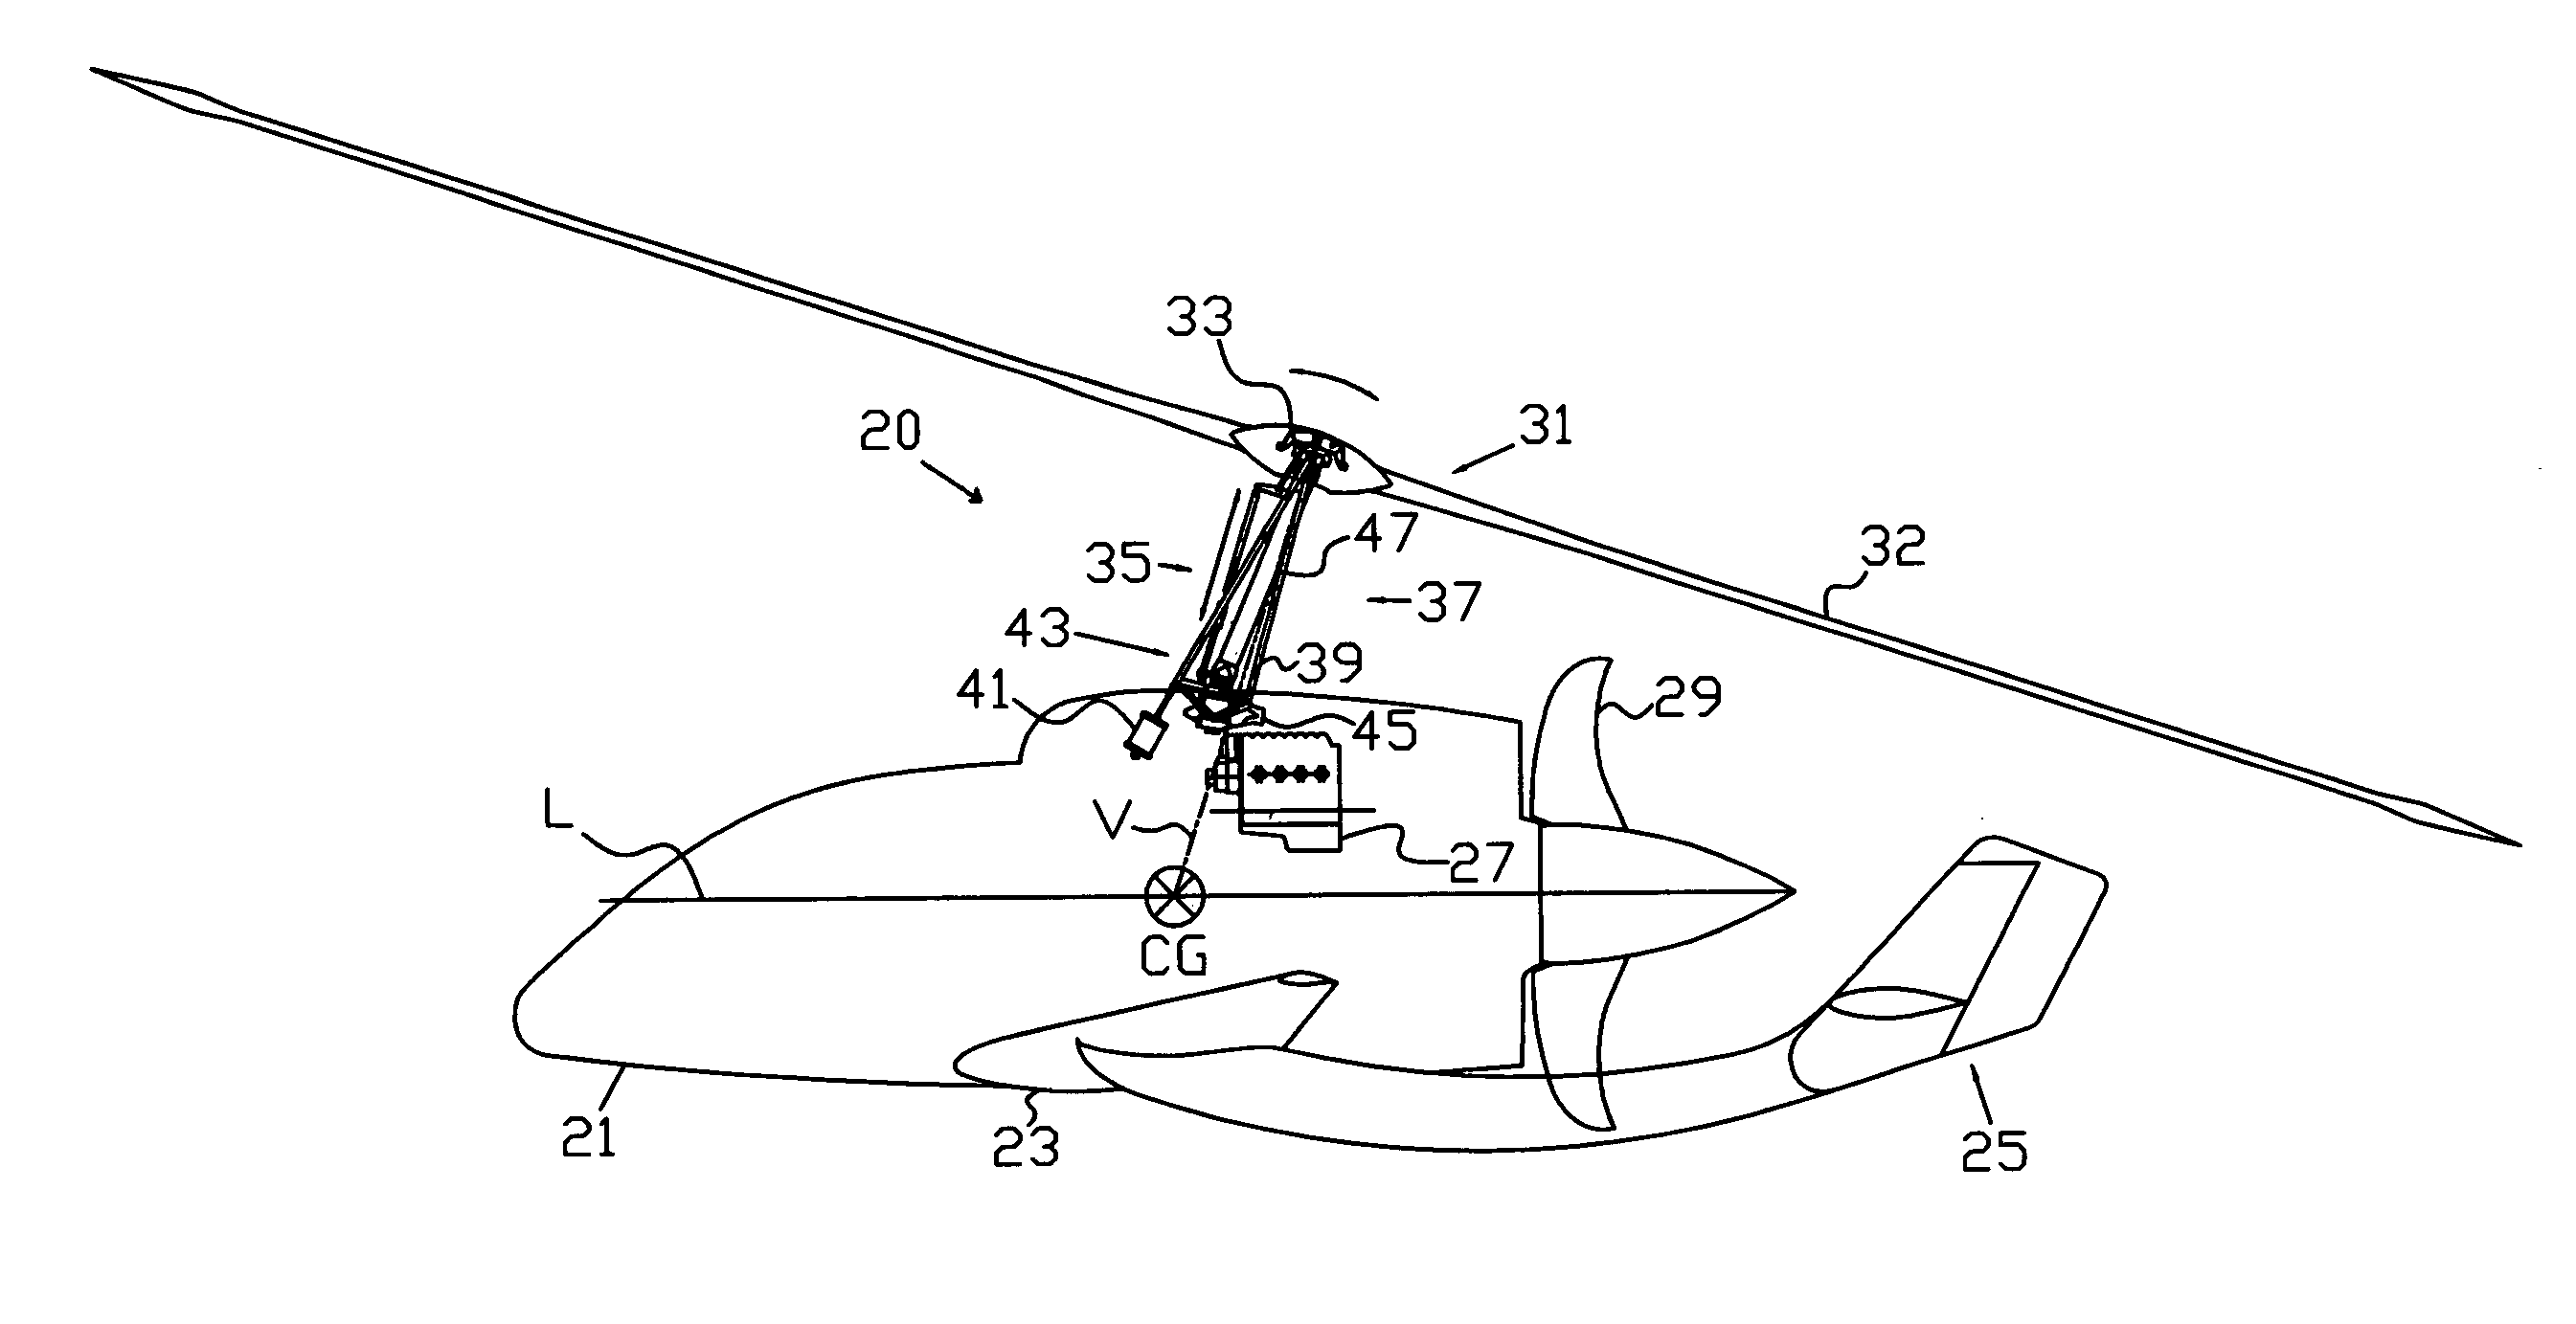 Tilting mast in a rotorcraft